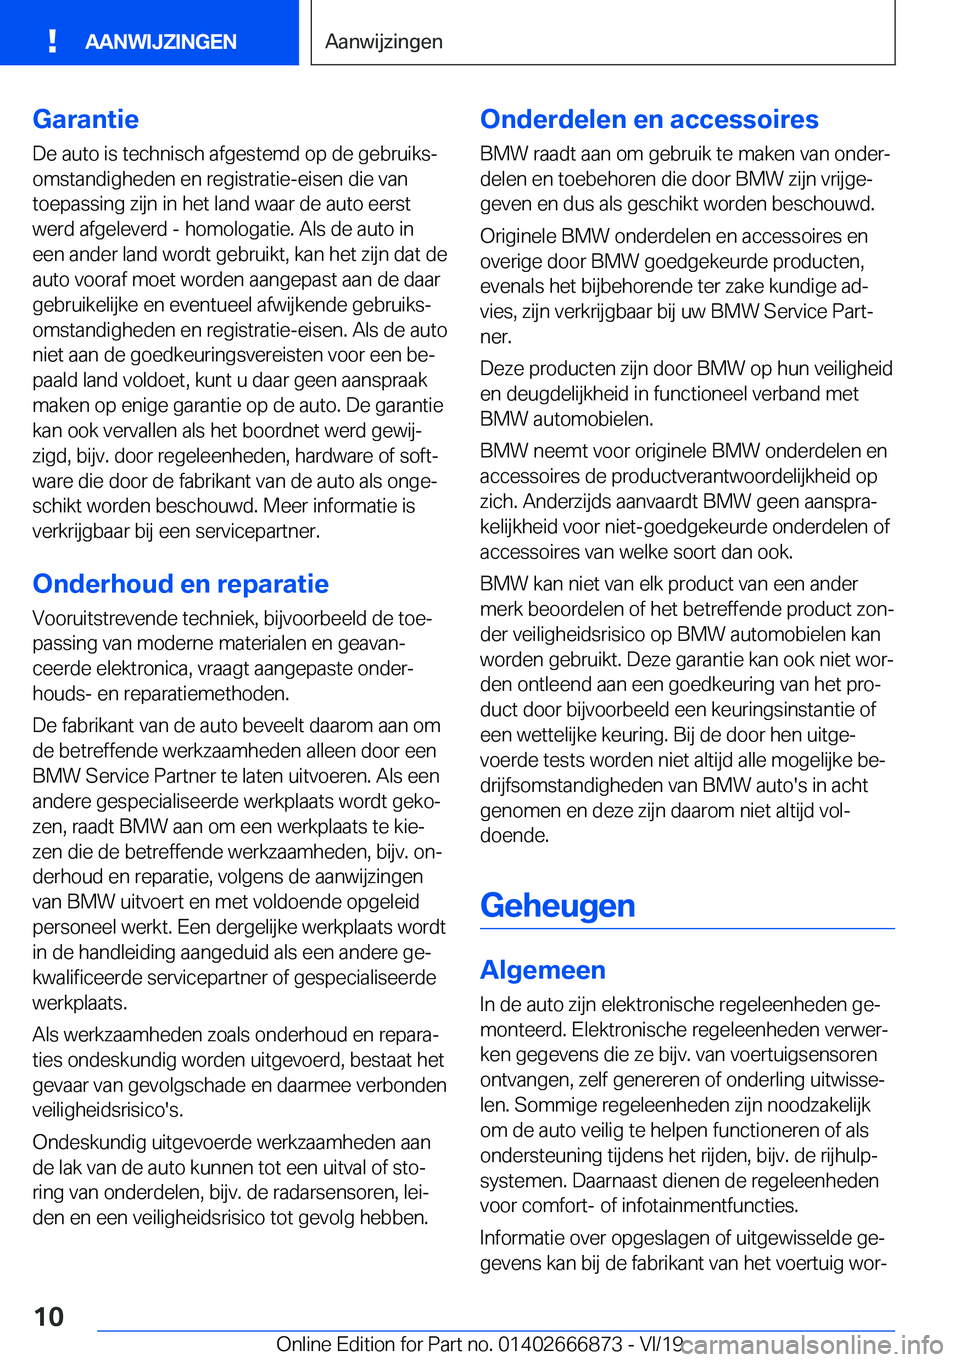 BMW X4 M 2020  Instructieboekjes (in Dutch) �G�a�r�a�n�t�i�e�D�e��a�u�t�o��i�s��t�e�c�h�n�i�s�c�h��a�f�g�e�s�t�e�m�d��o�p��d�e��g�e�b�r�u�i�k�sj
�o�m�s�t�a�n�d�i�g�h�e�d�e�n��e�n��r�e�g�i�s�t�r�a�t�i�e�-�e�i�s�e�n��d�i�e��v�a�n �t�o